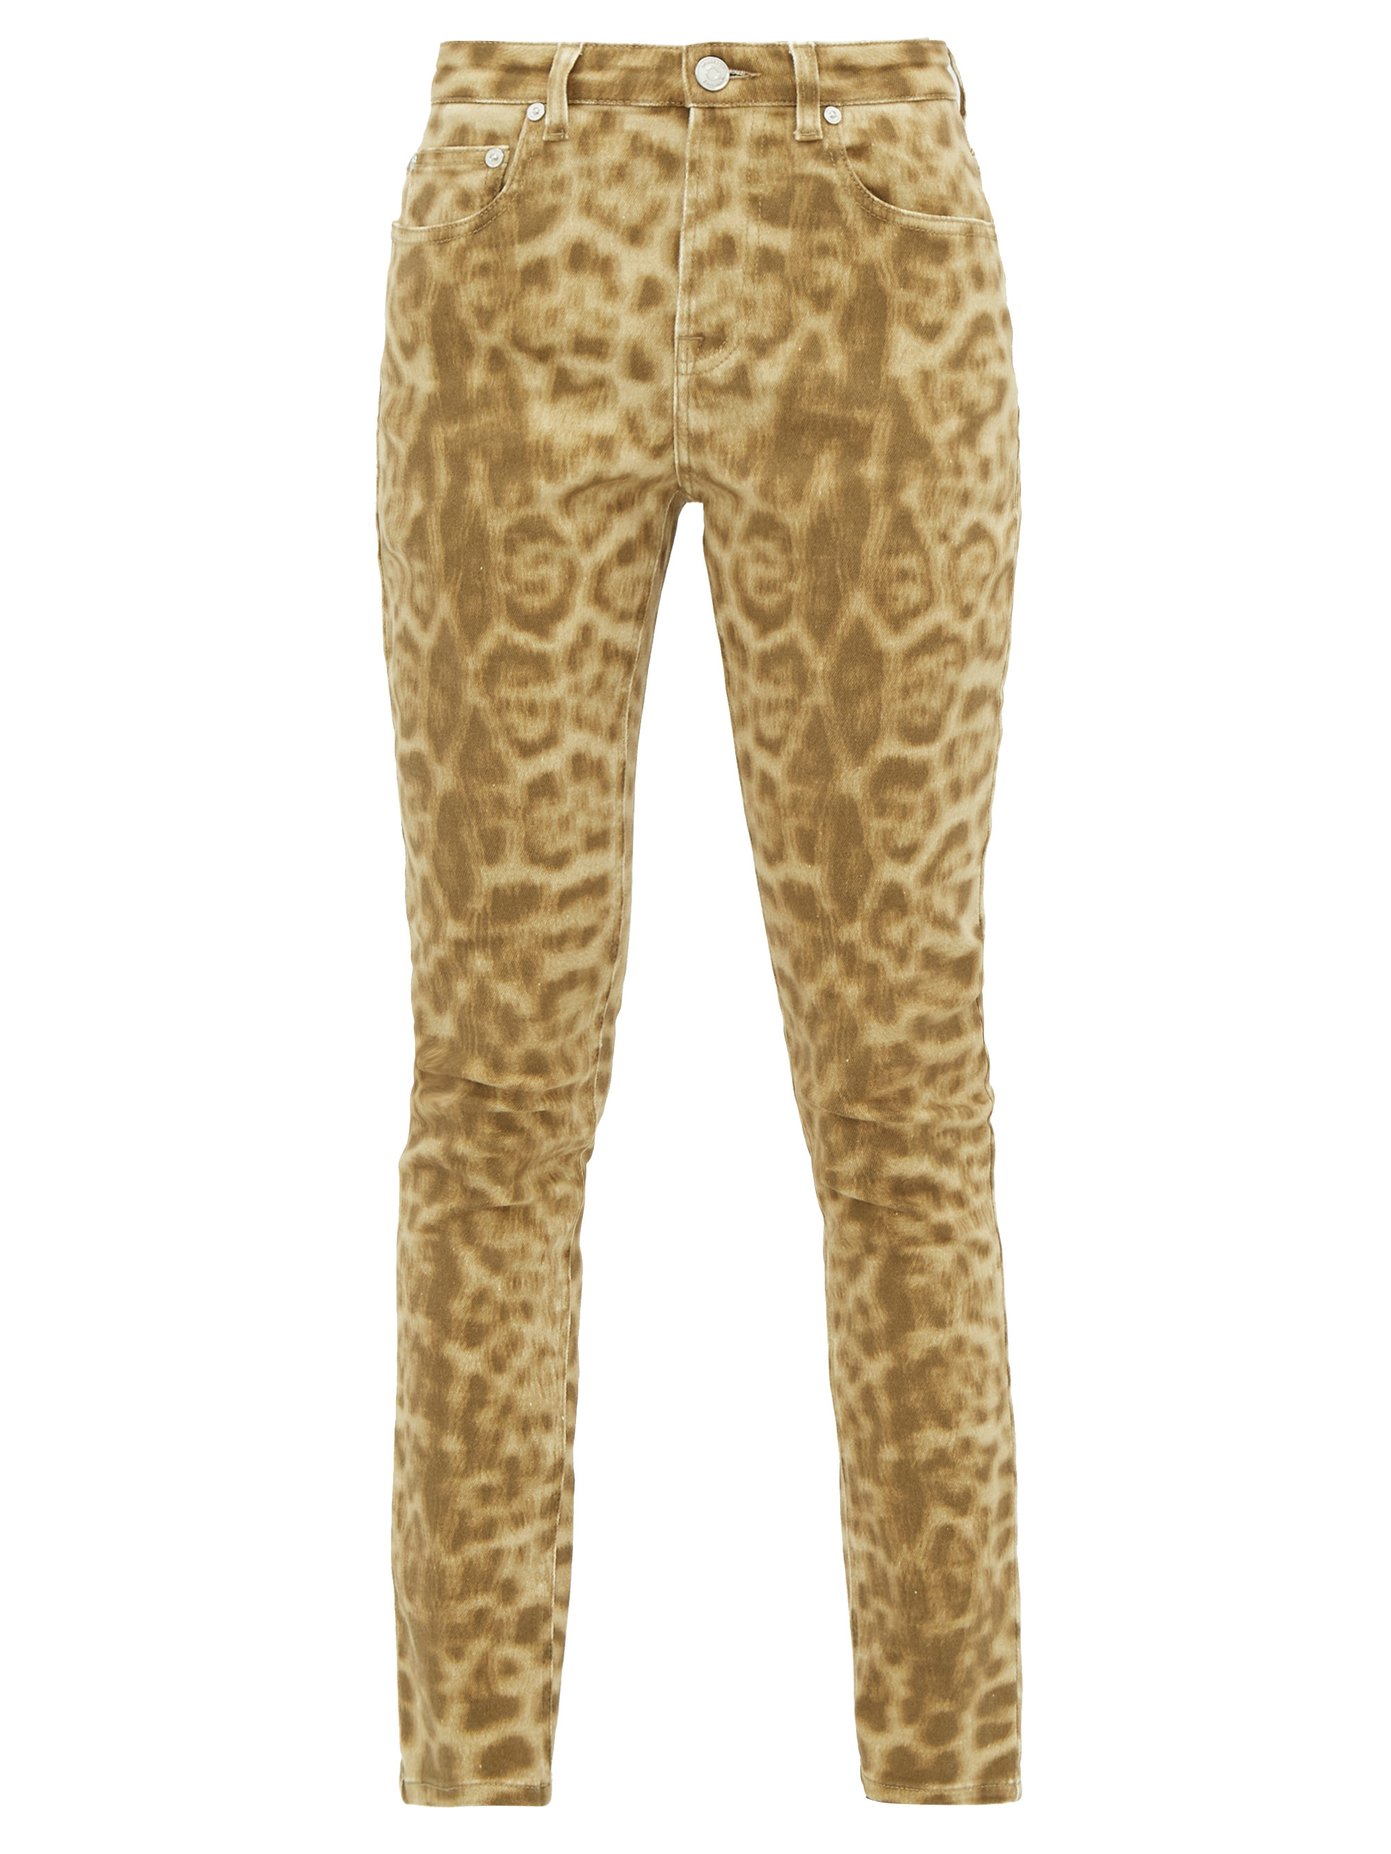 leopard jeans